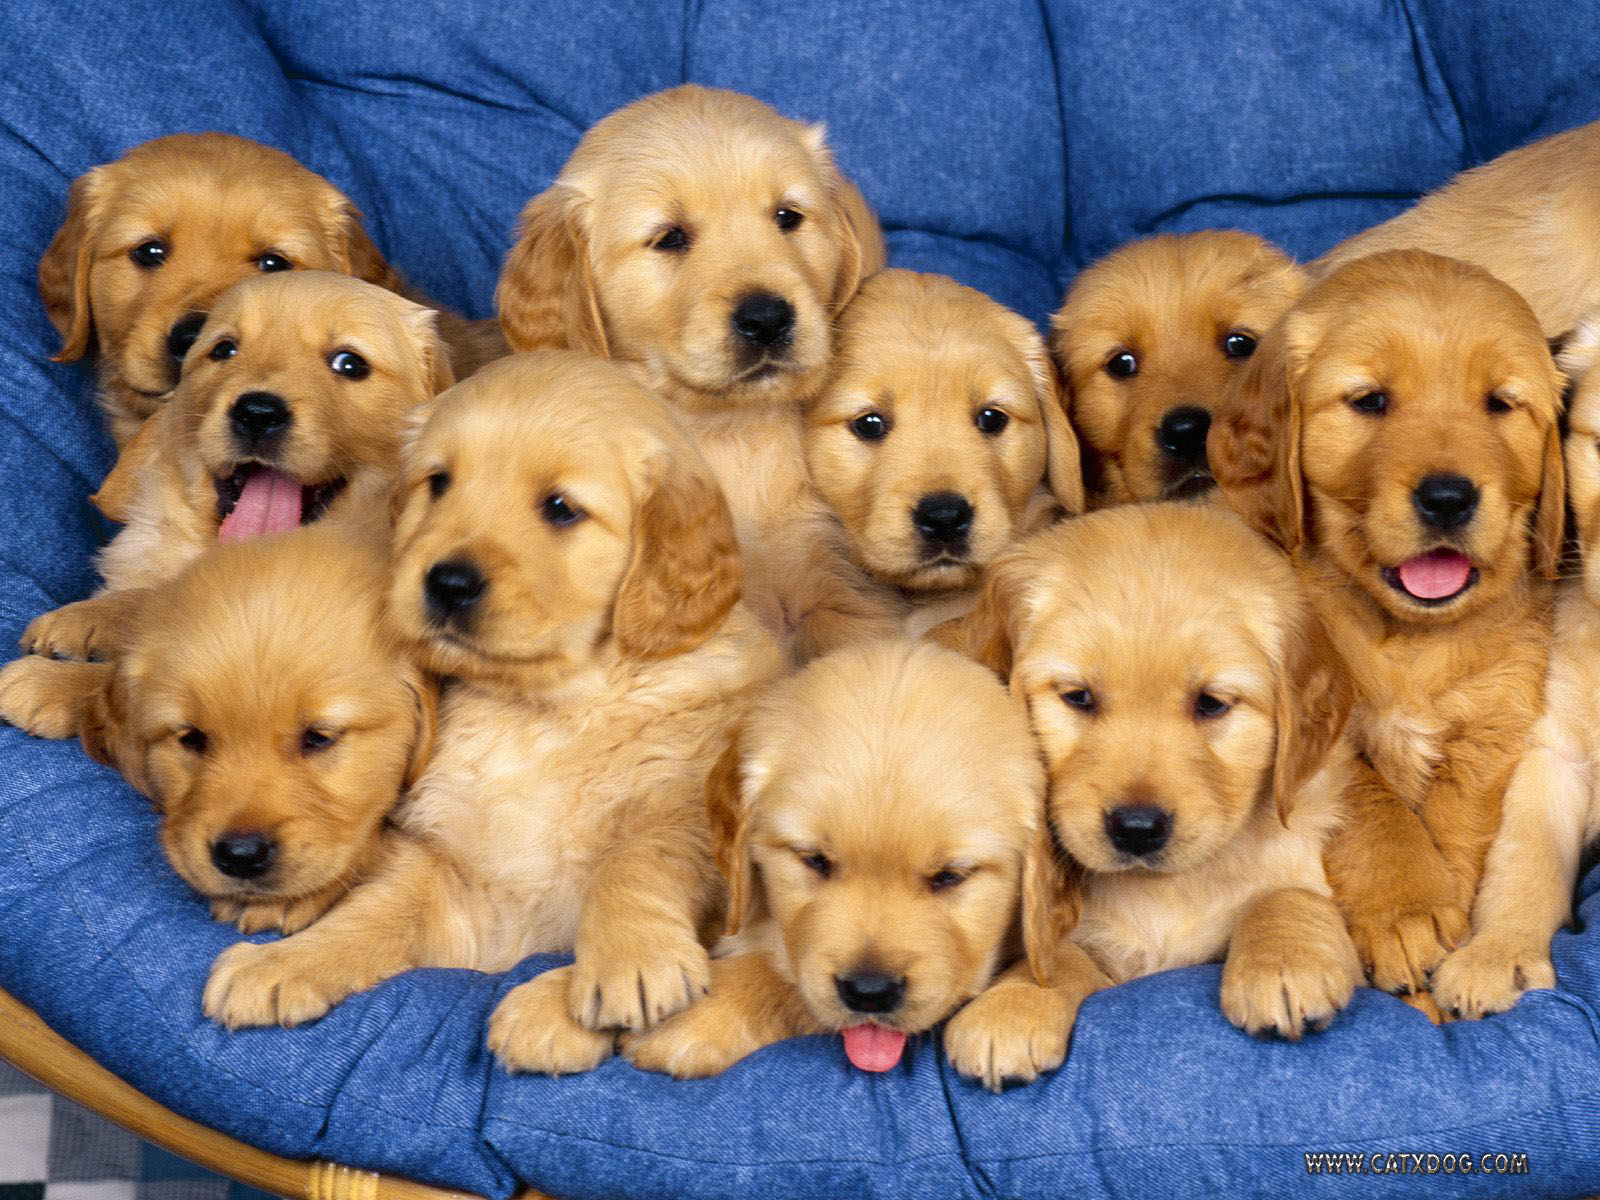 Cute Puppies Pictures Puppy Photos Golden Retriever